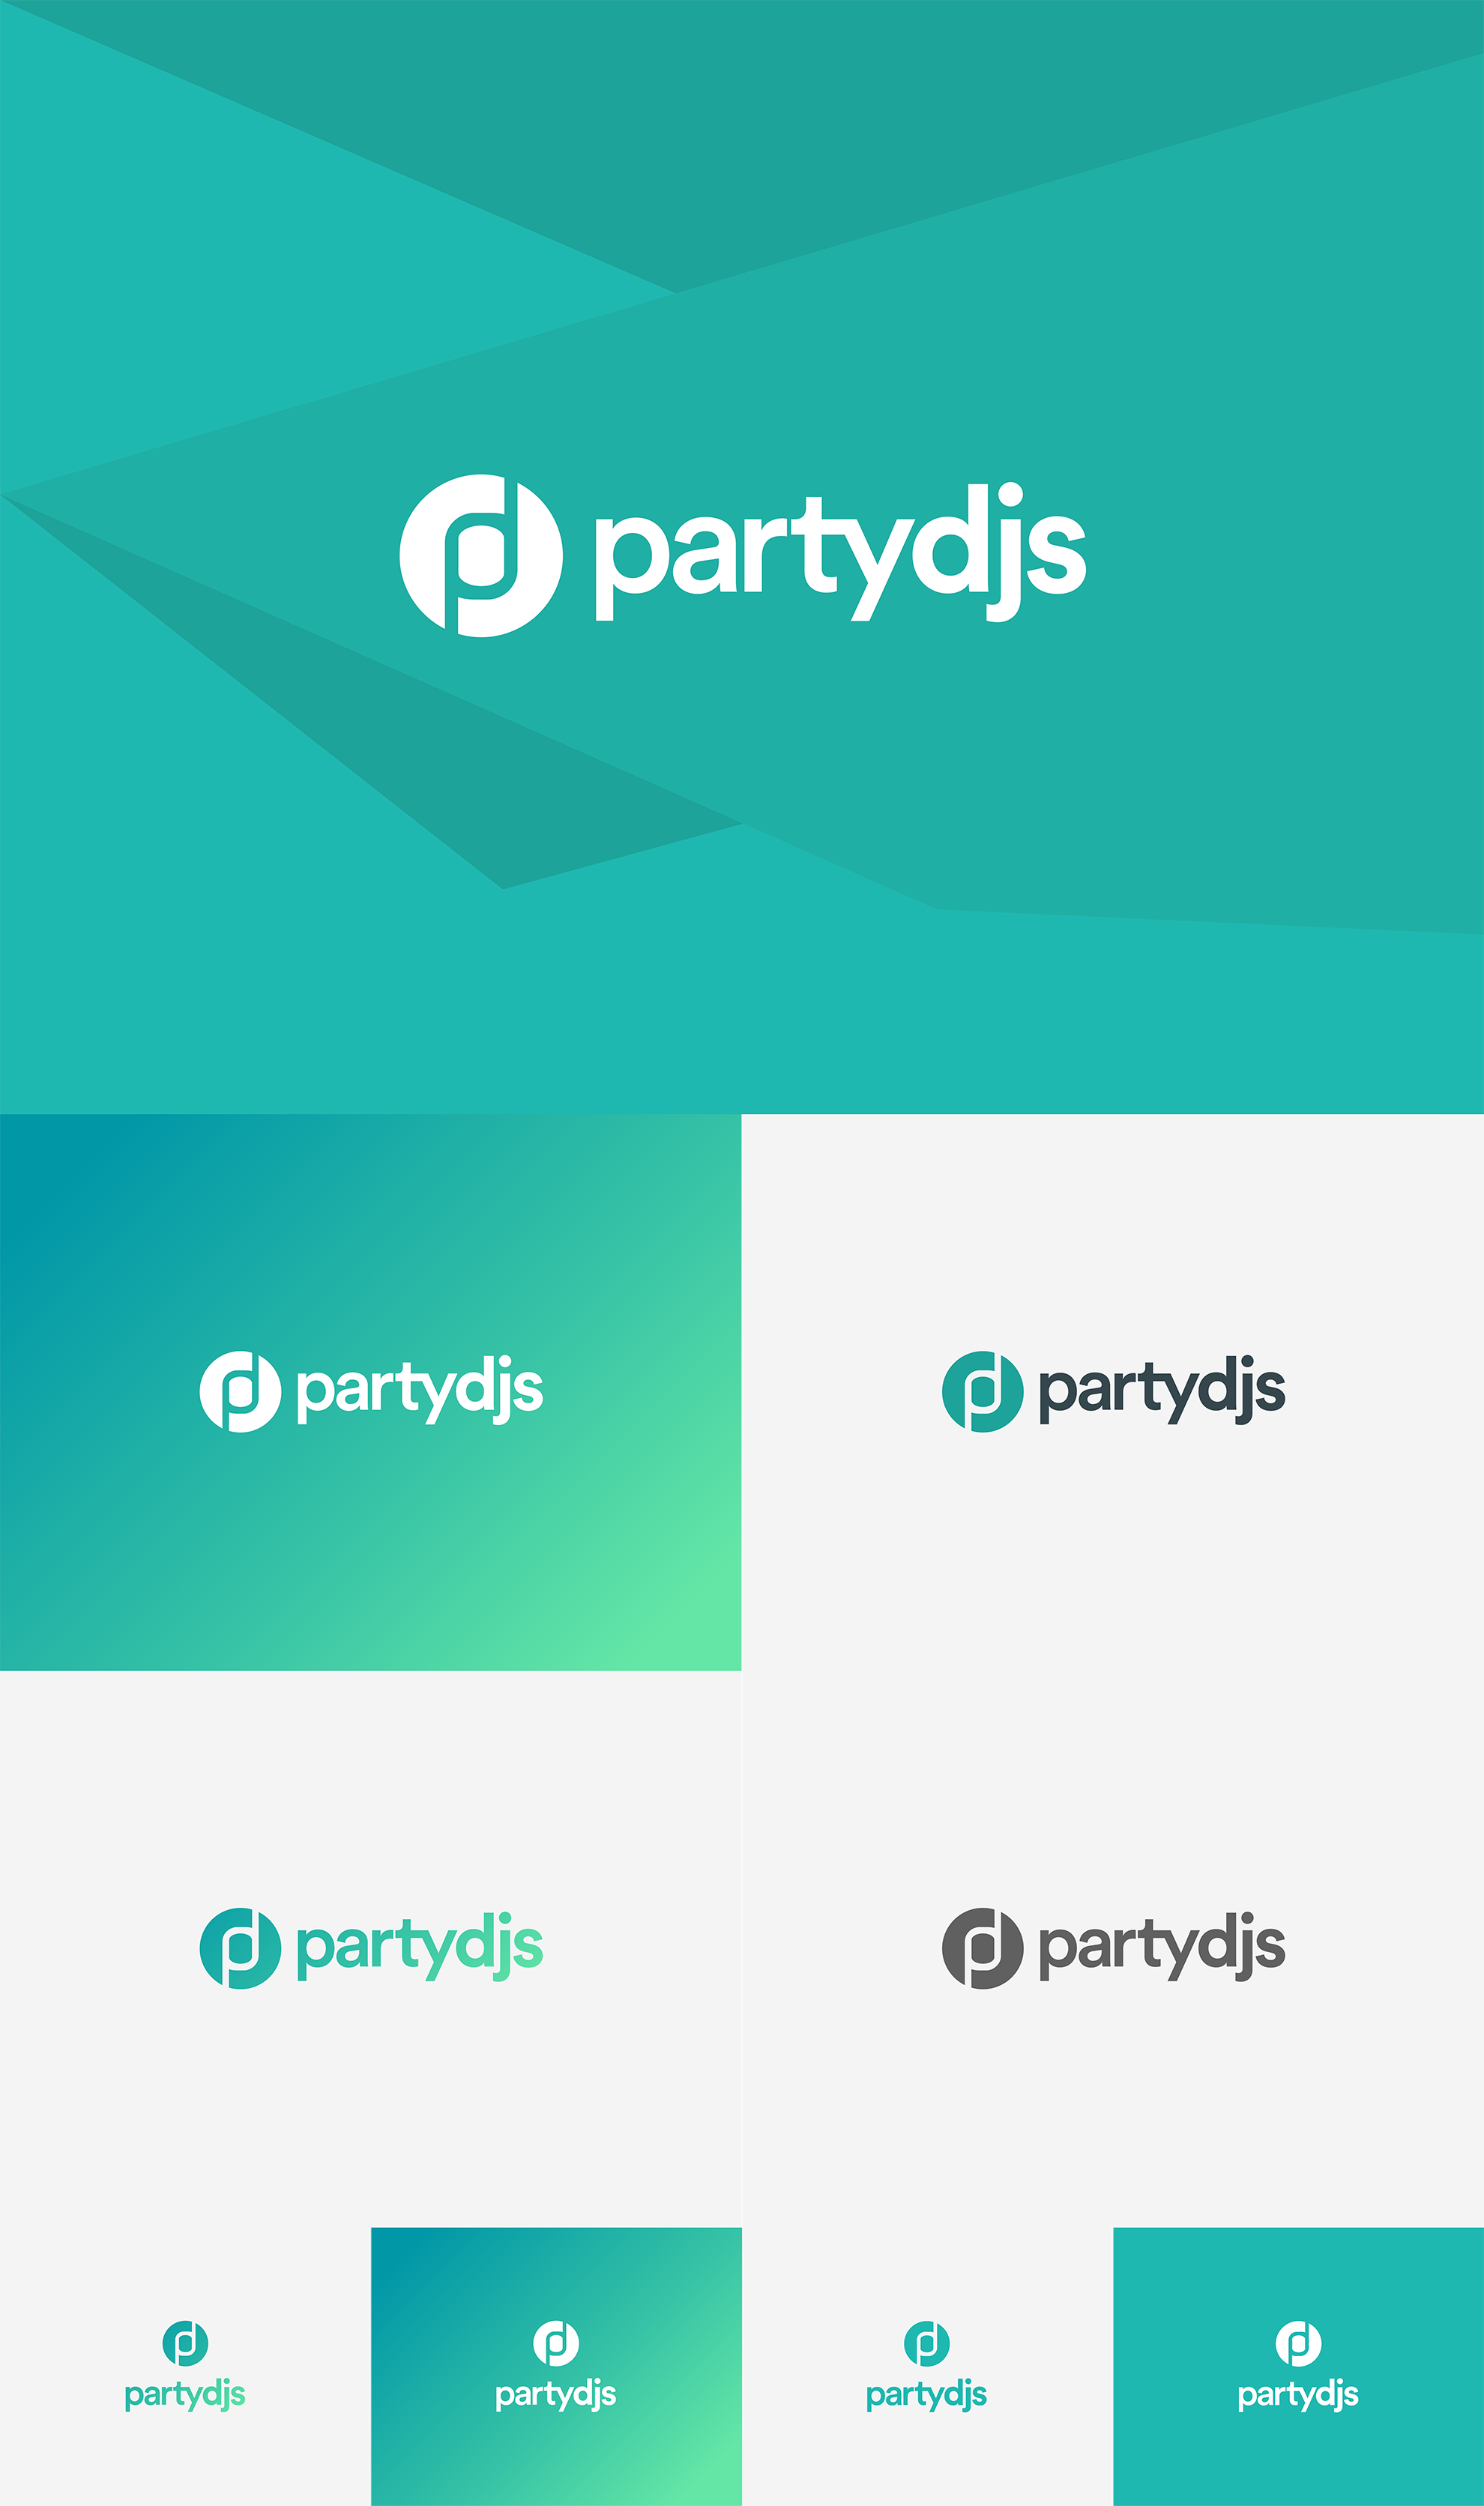 partydjs_1